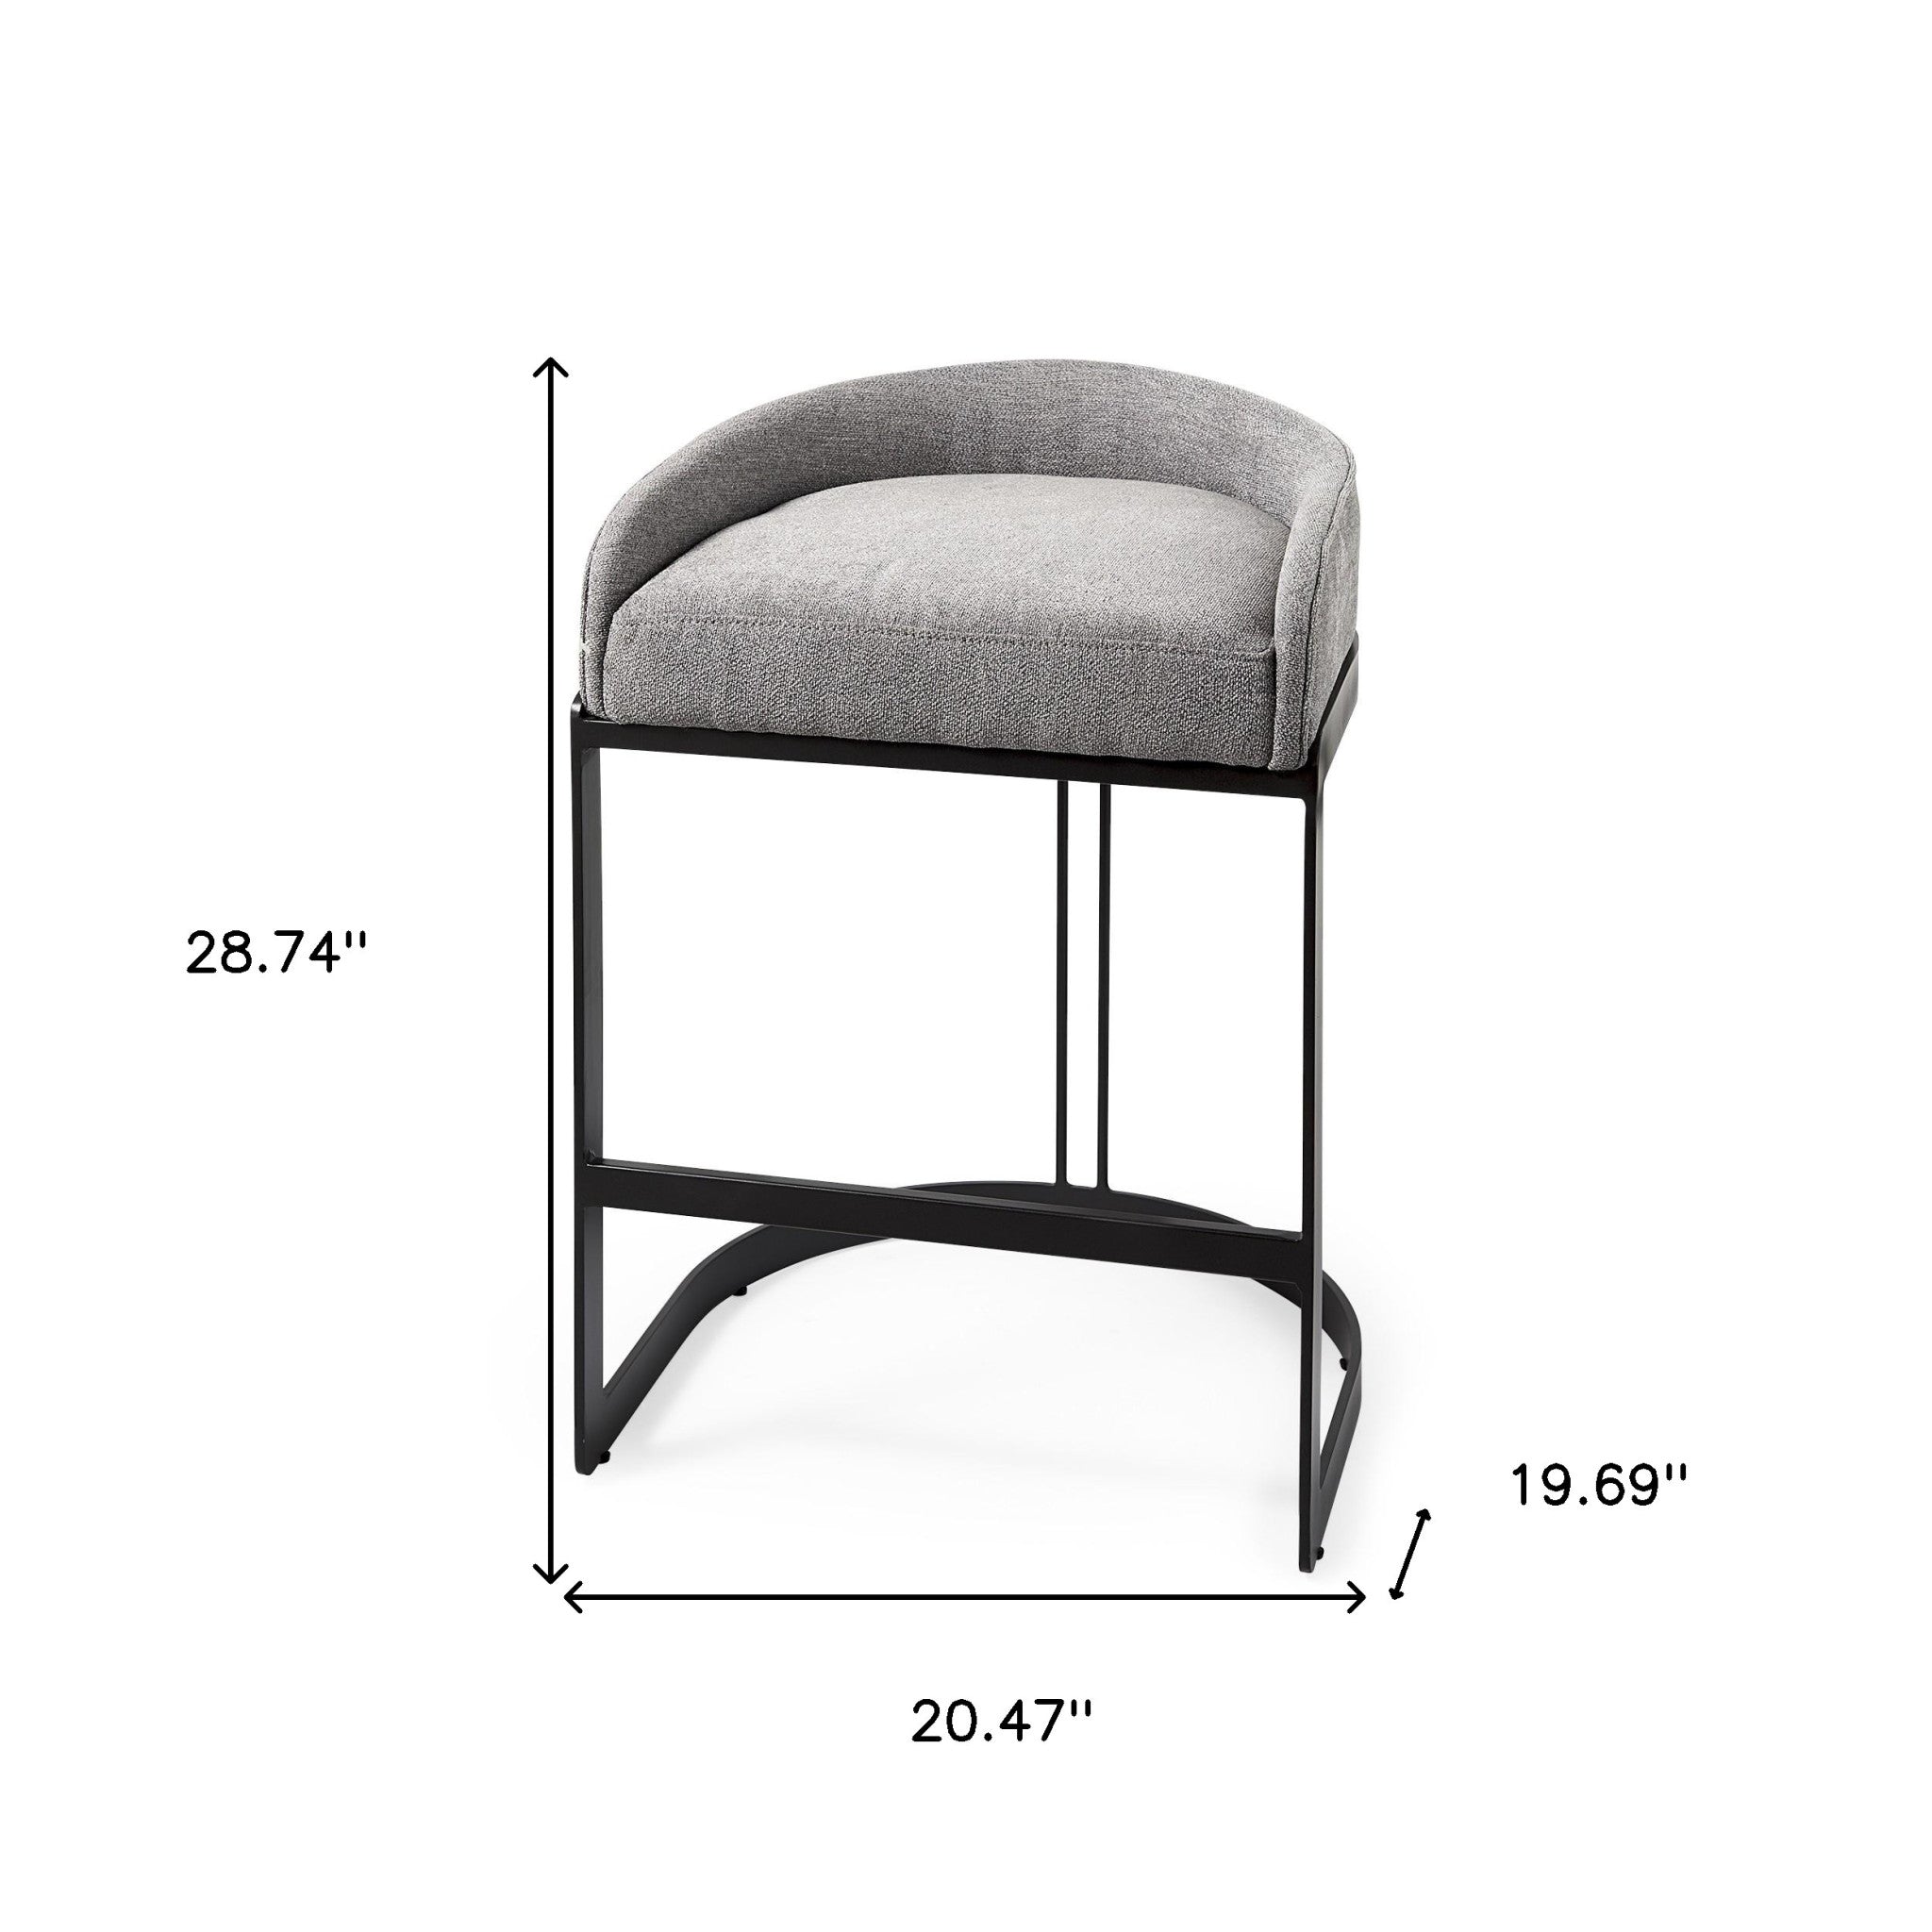 29" Grey Steel Low back Bar Chair